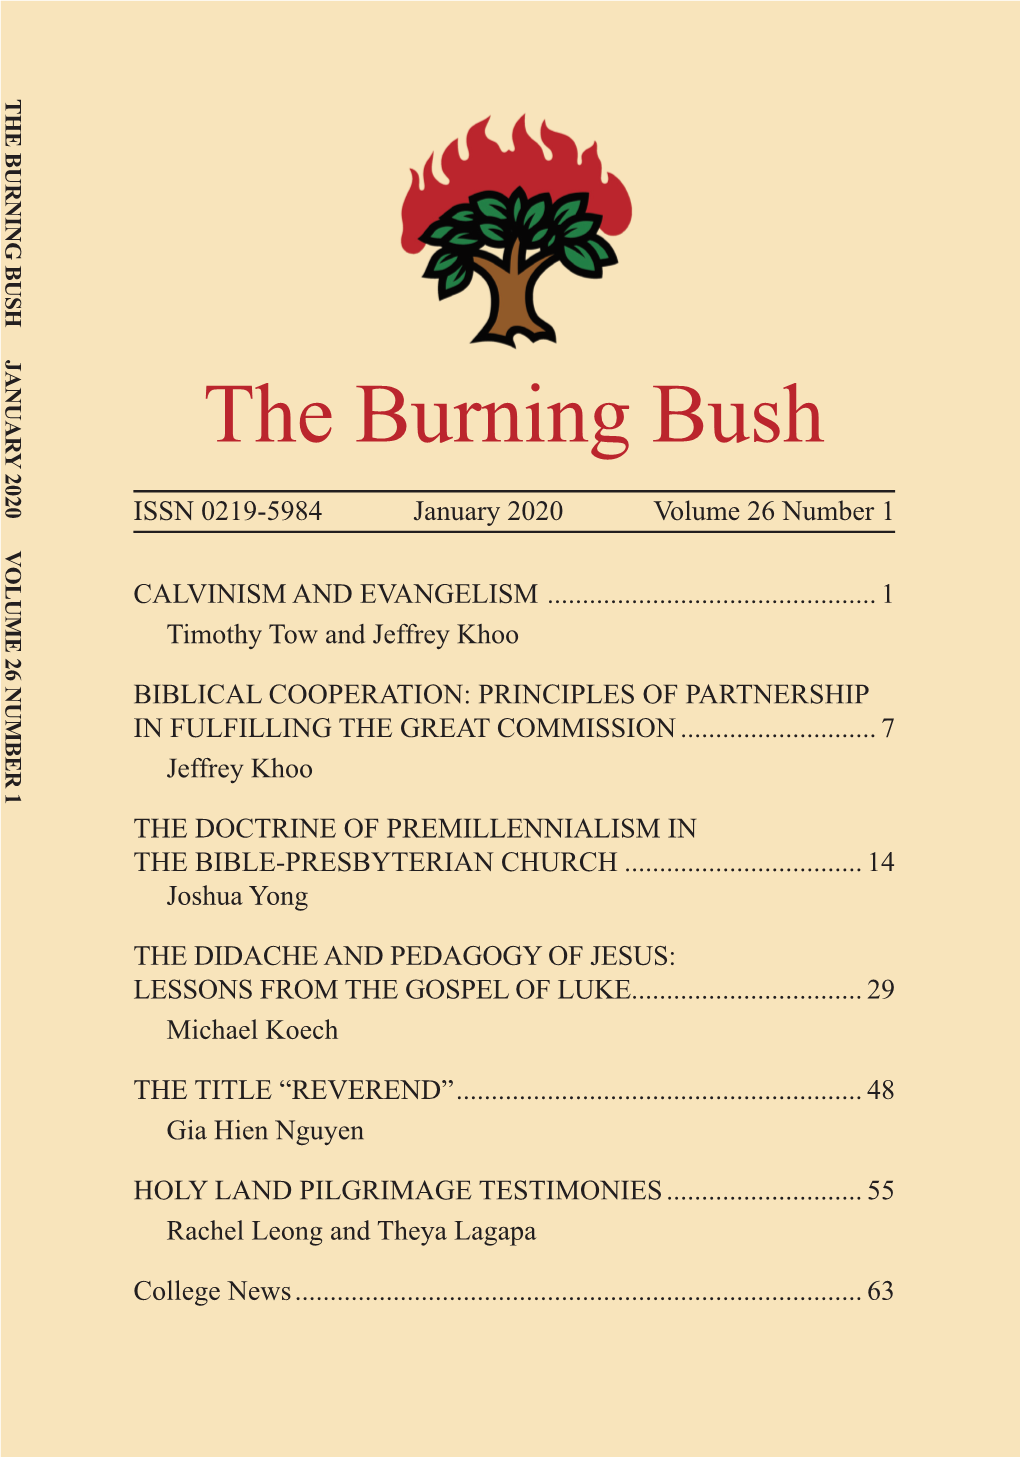 The Burning Bush January 2020 Volumenumber 1 26